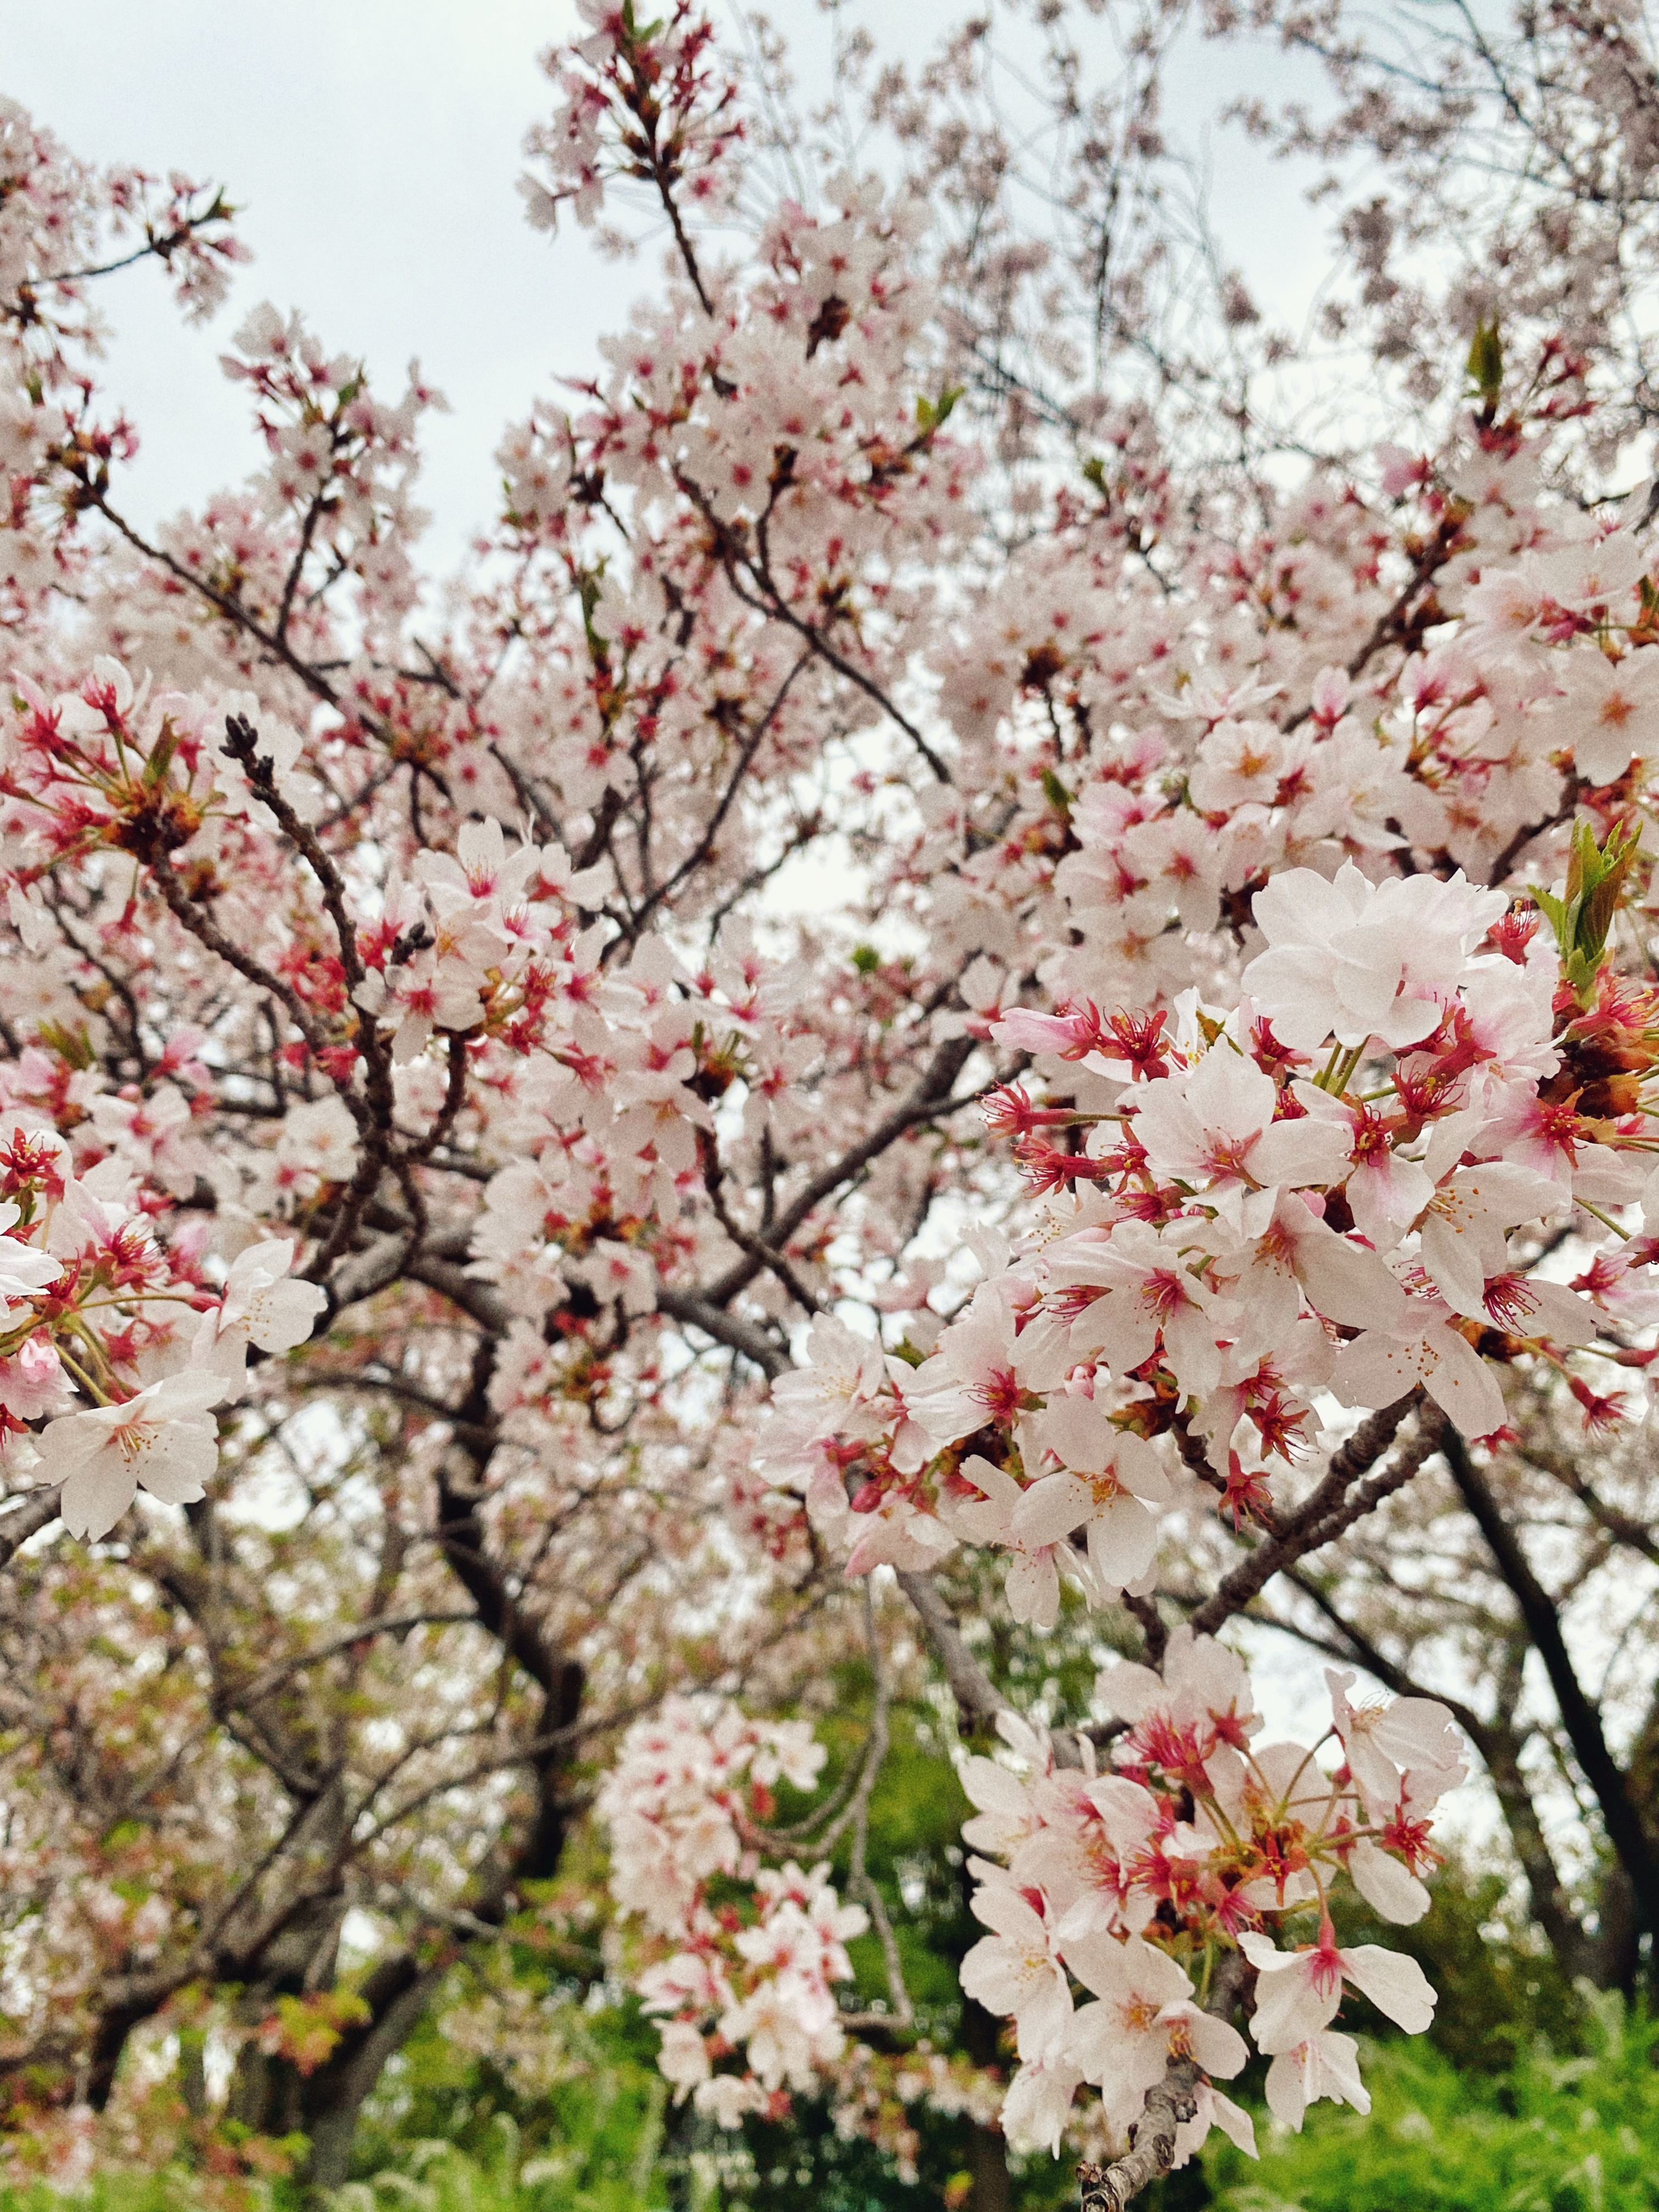  "Cherry Blossom.jpg"